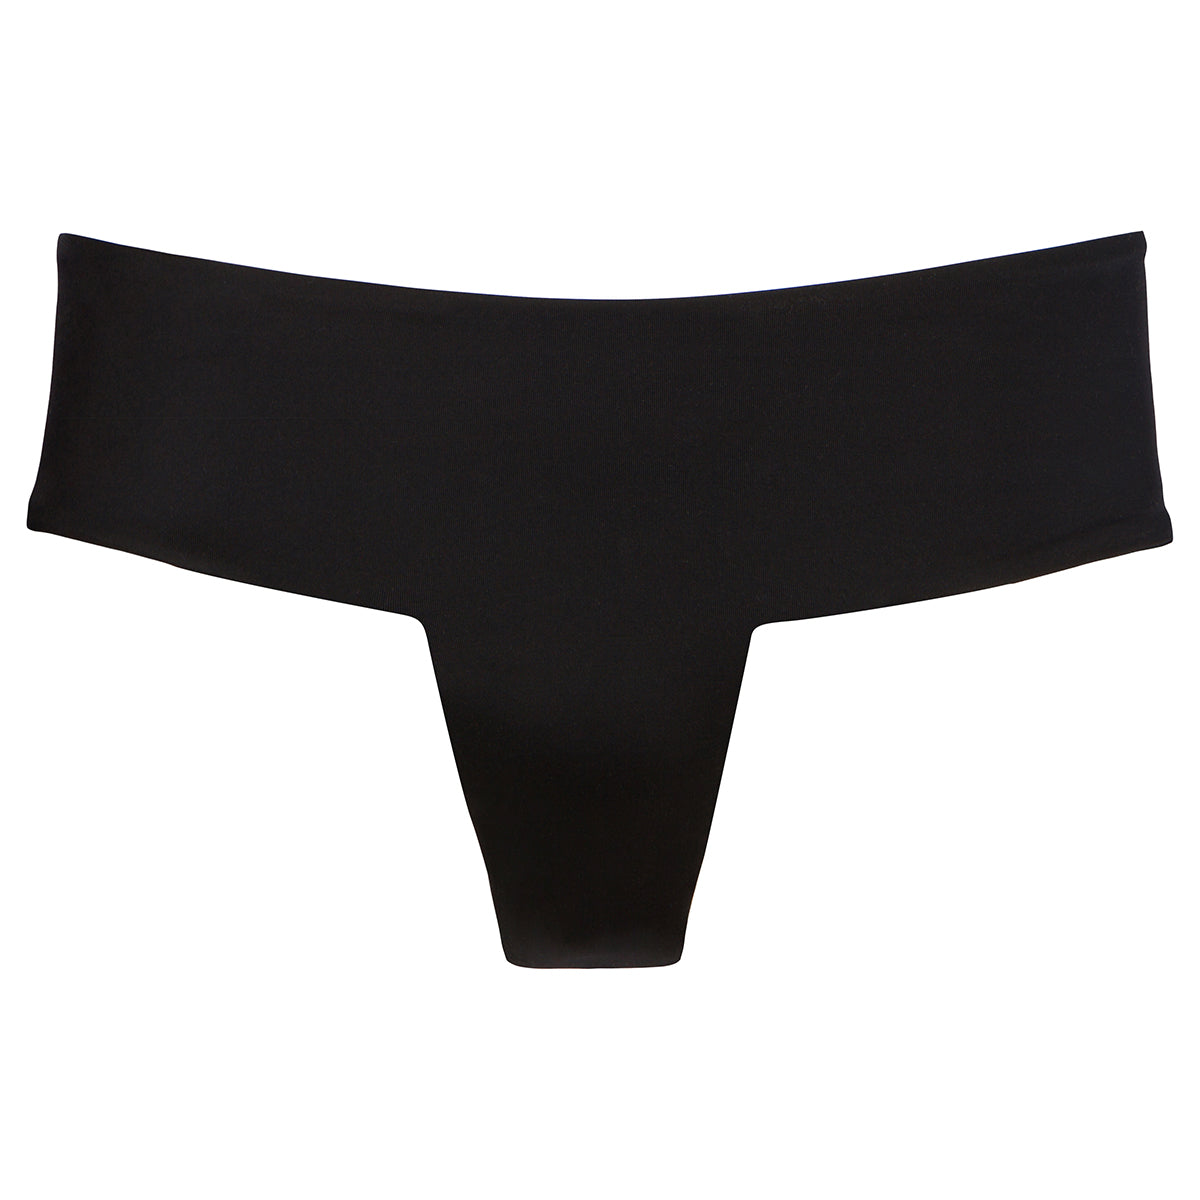 Carlo Square: The Modern Boy Brief Bikini Bottom